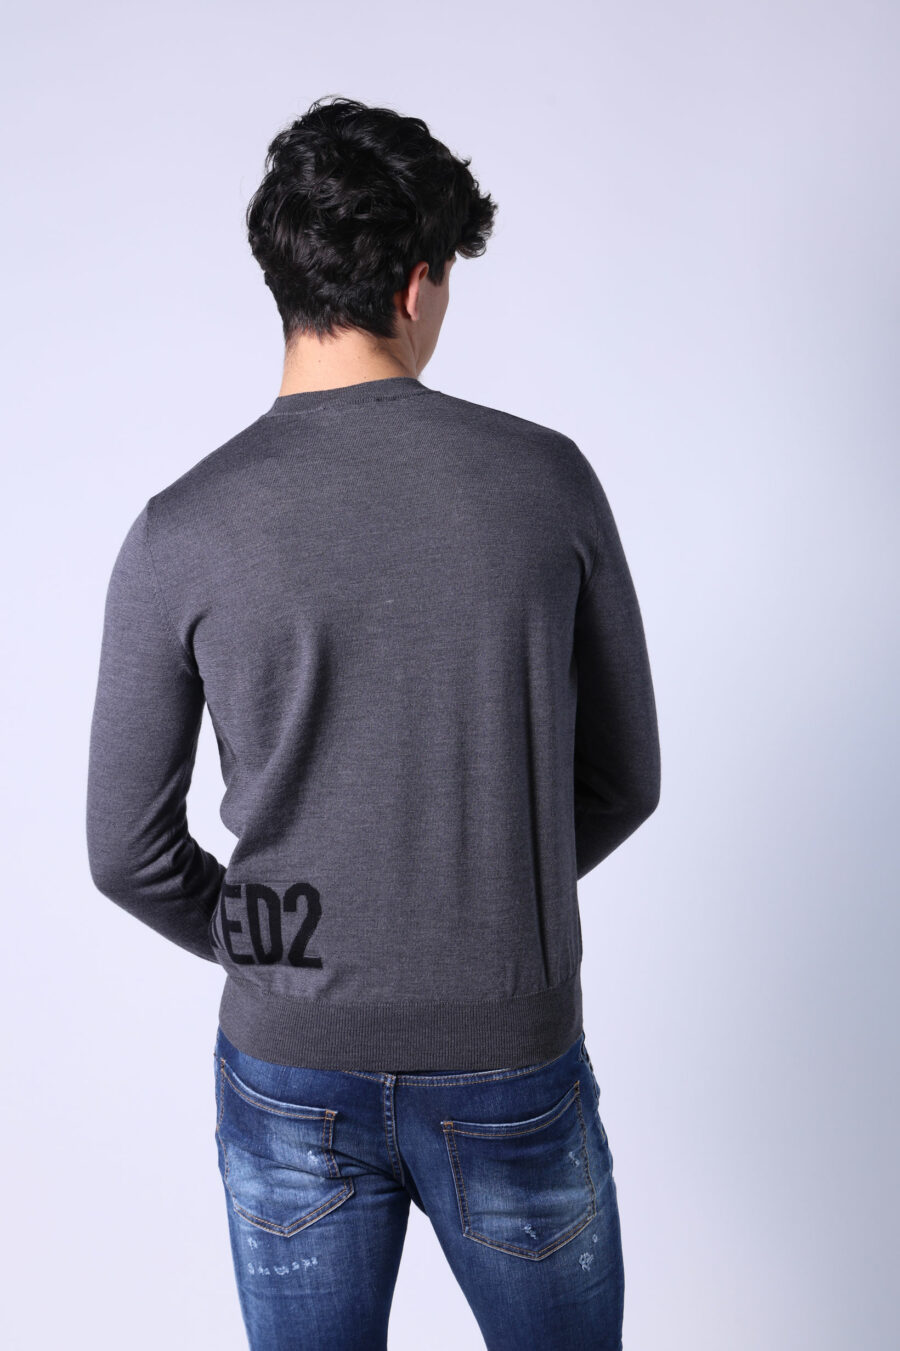 Dark grey jumper with side logo - Untitled Catalog 05560